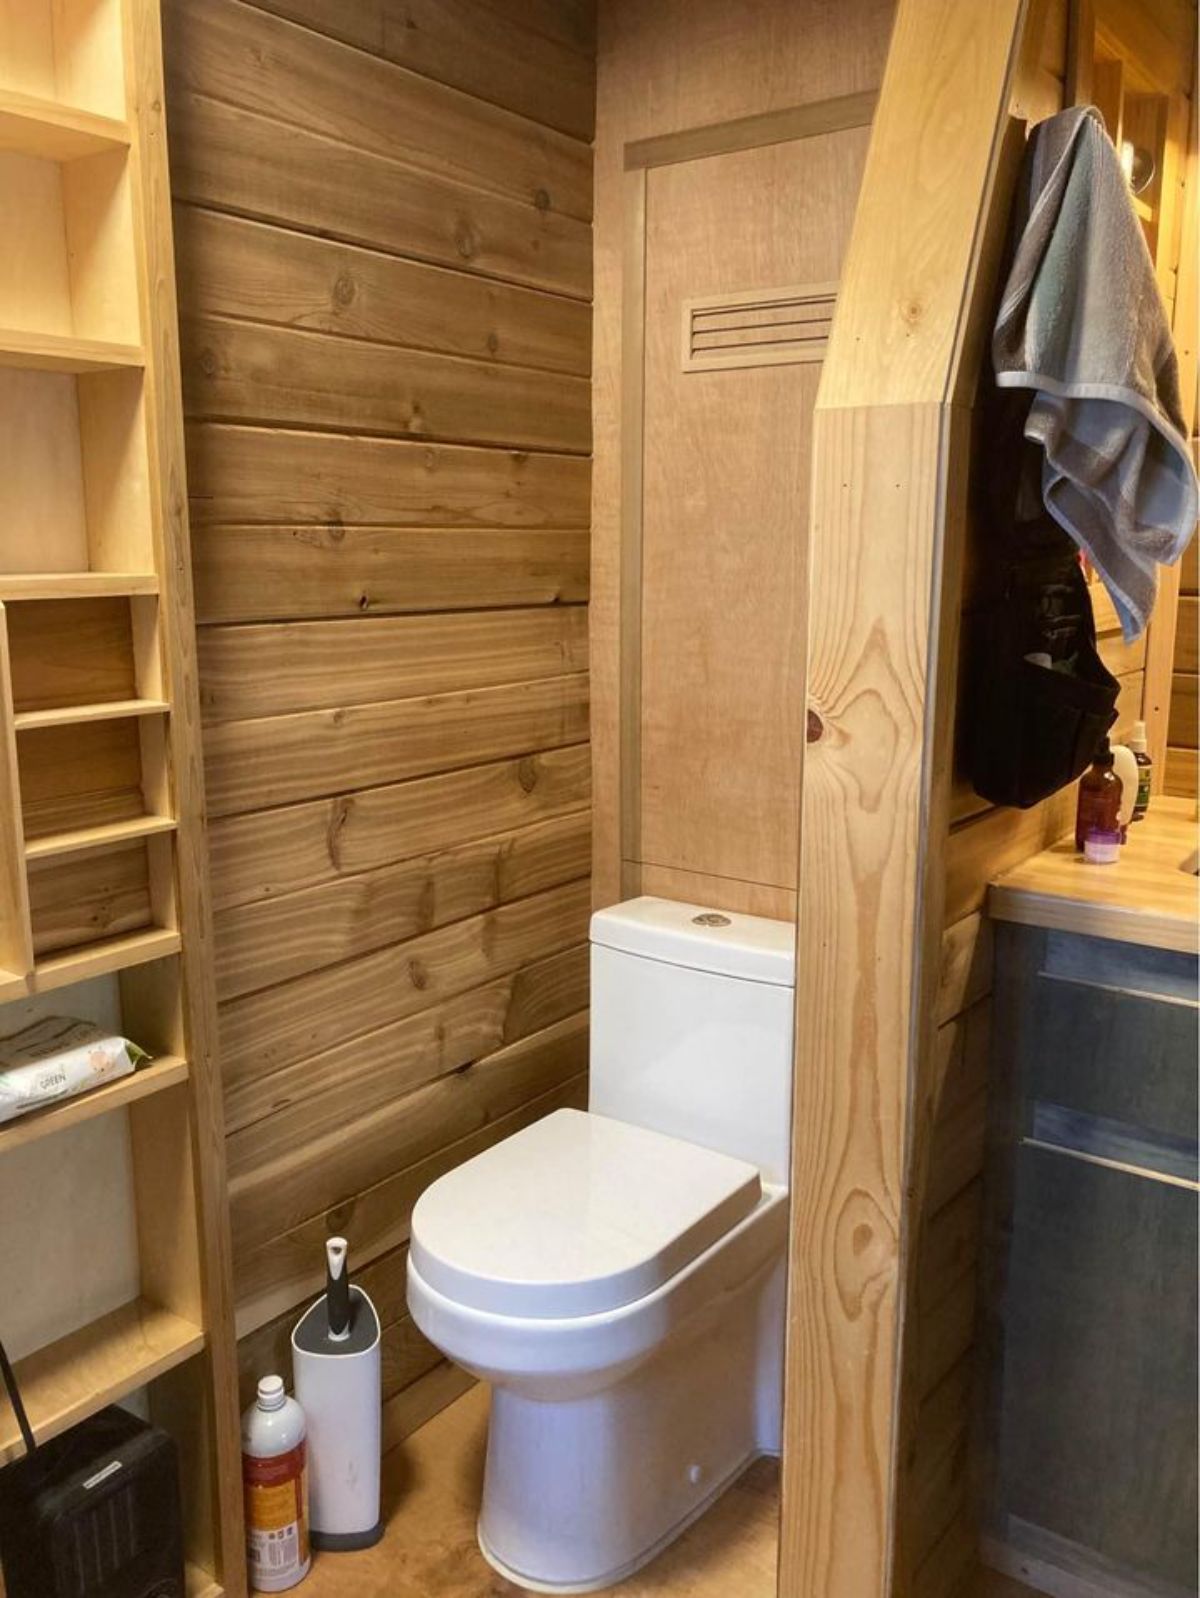 Standard toilet in bathroom of 24’ Rustic Tiny House On Wheels